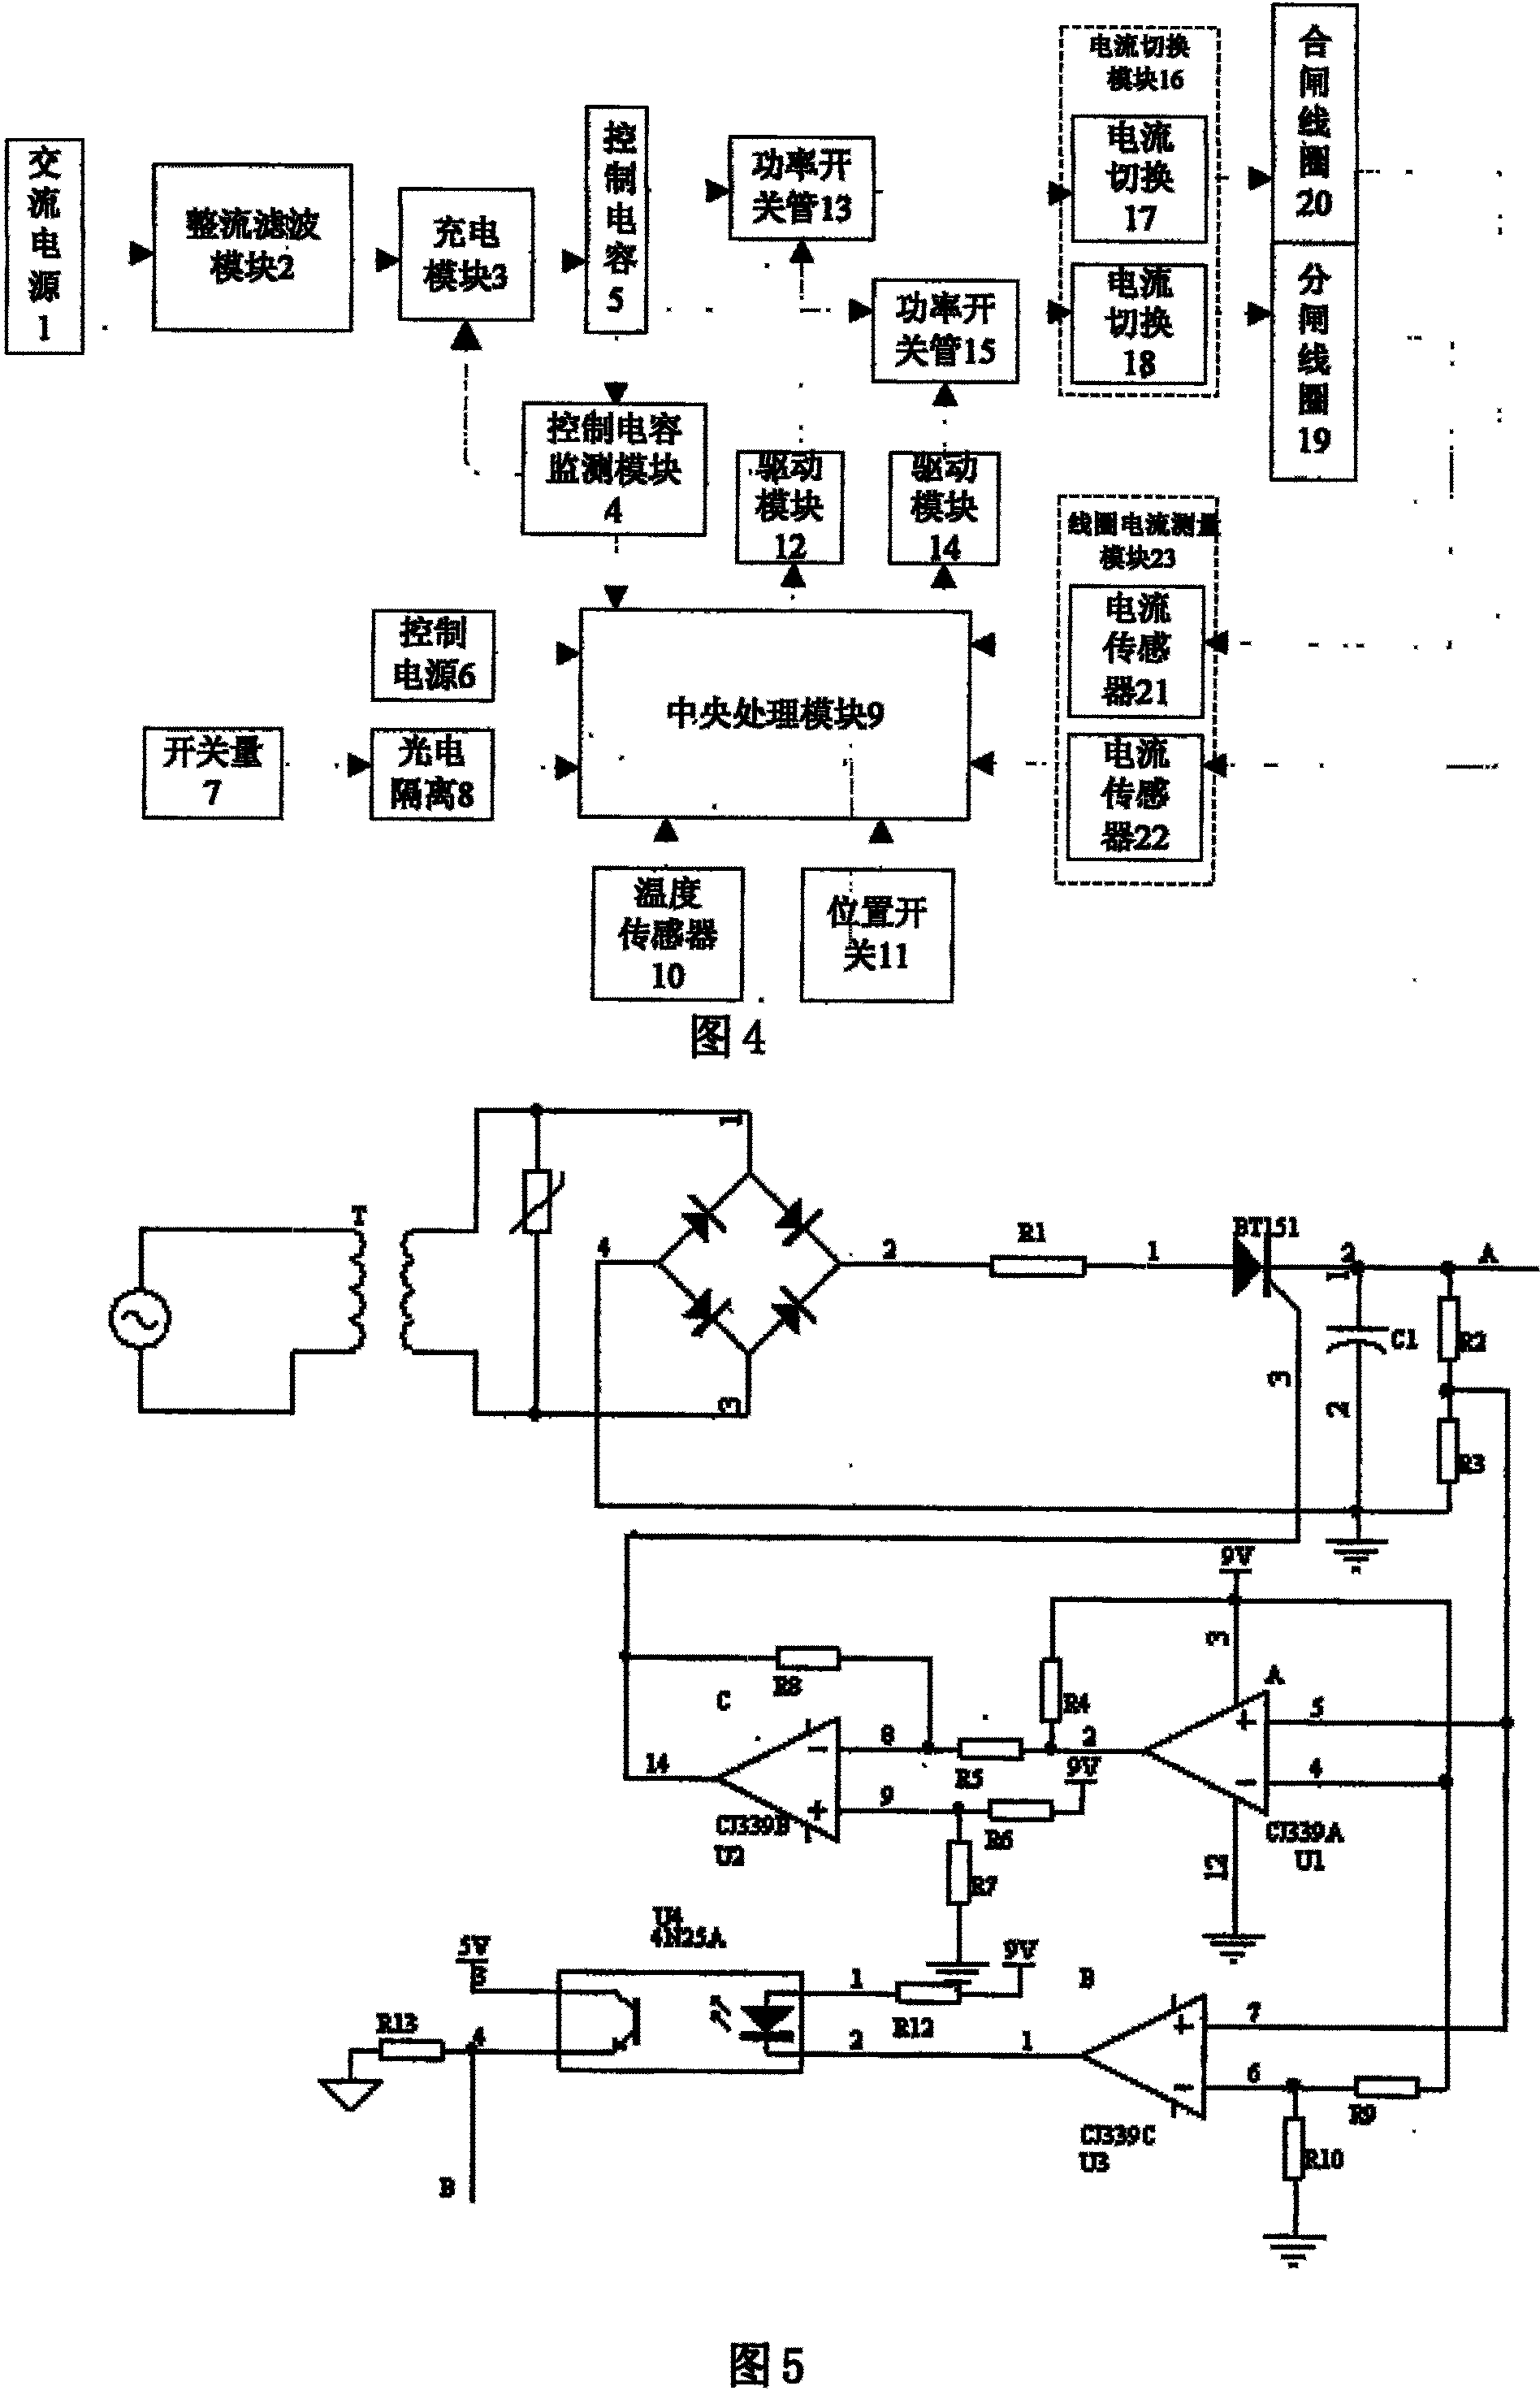 Double coil variable current control circuit of vacuum circuit breaker permanent magnet mechanism